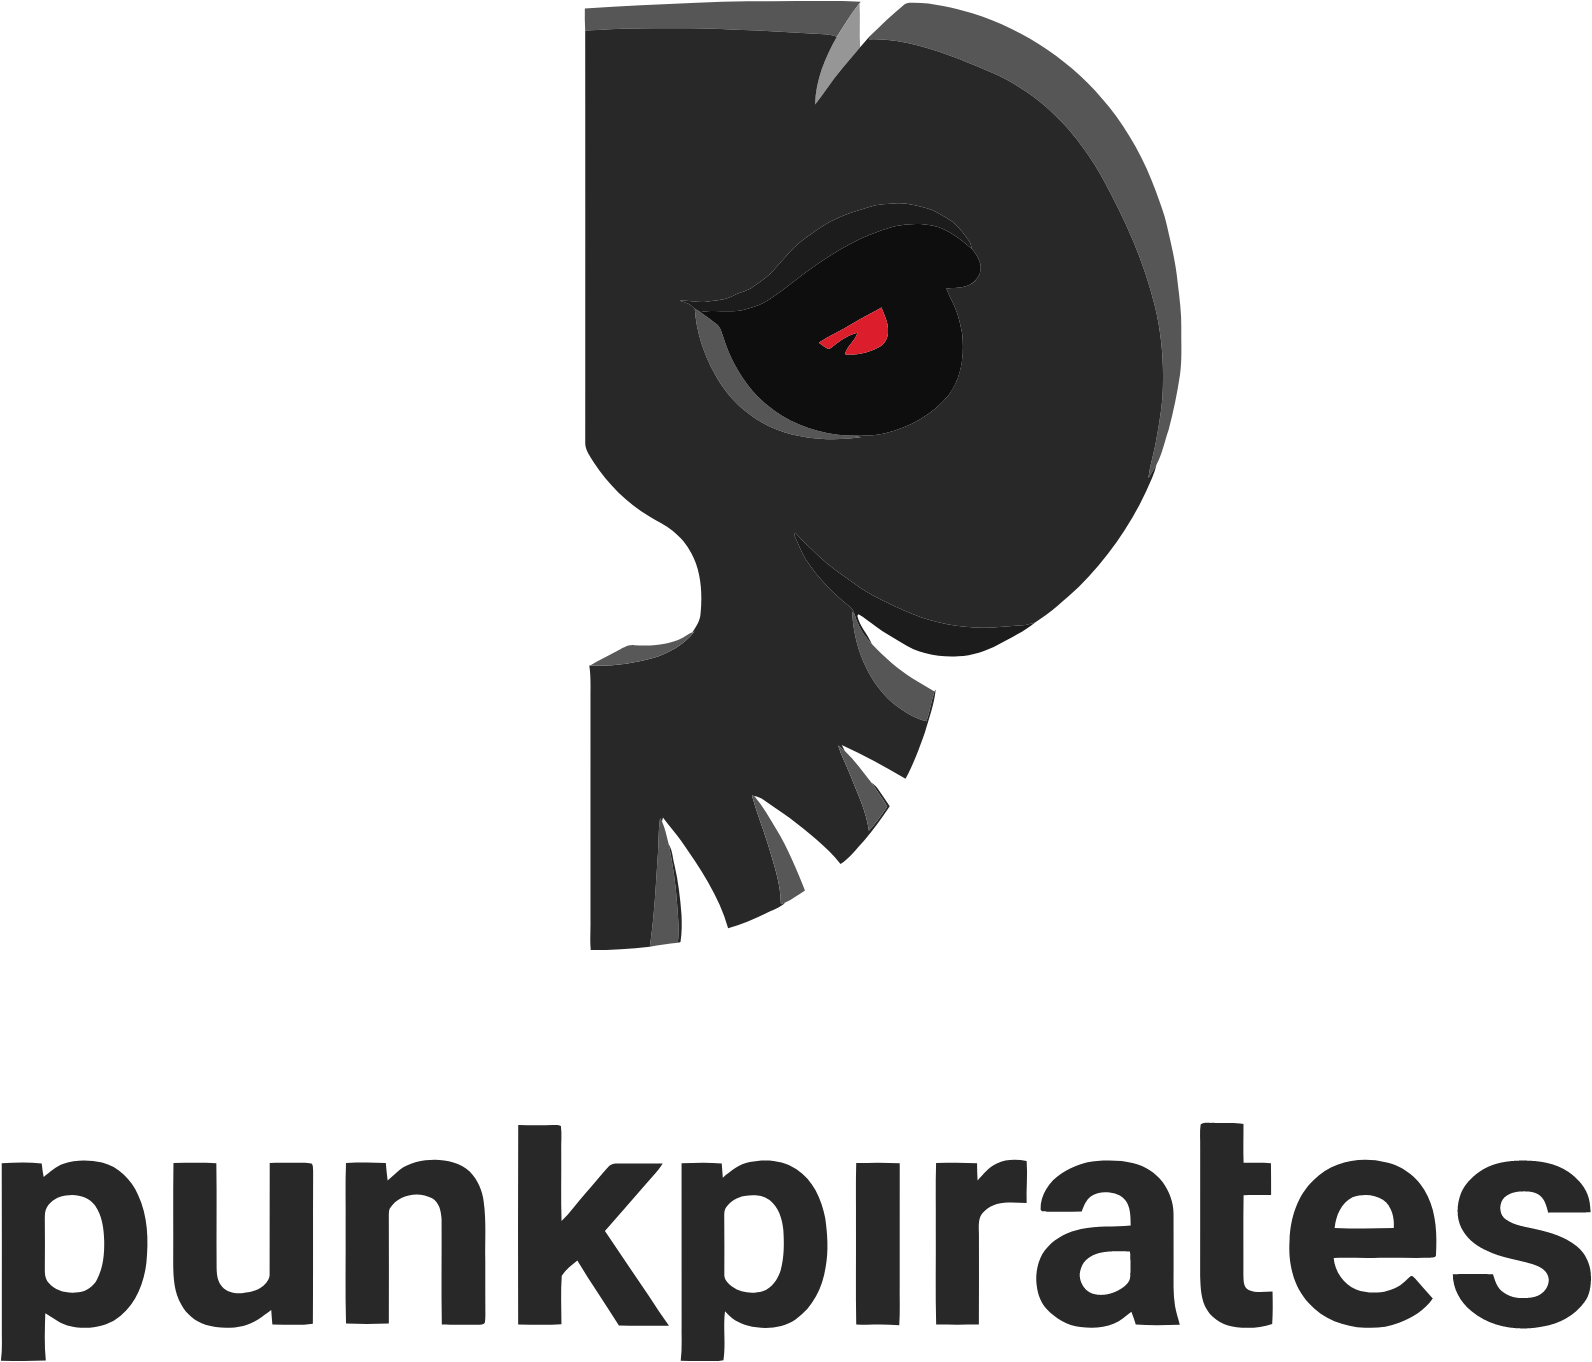 PunkPirates logo large (transparent PNG)